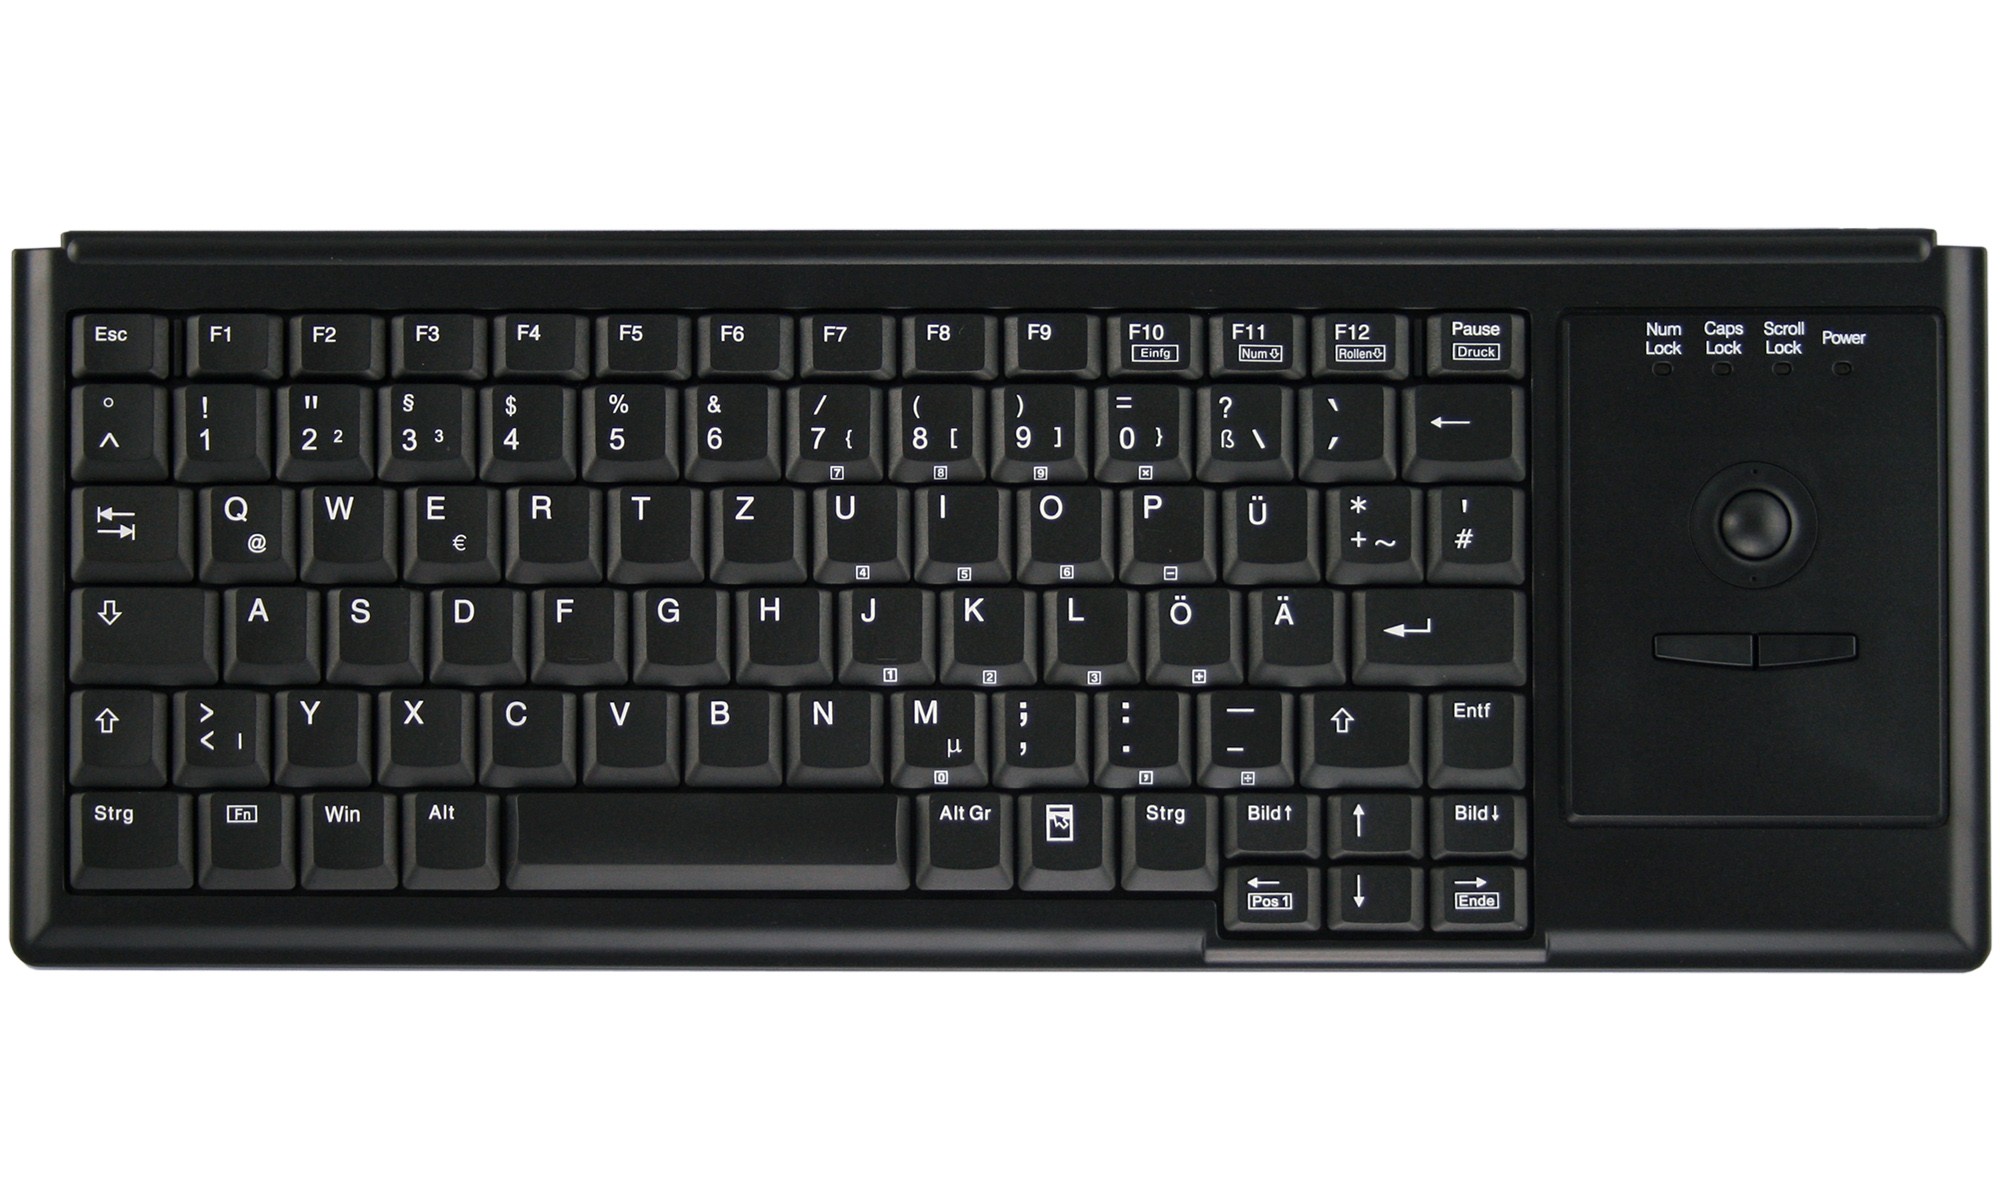 83 Key Notebook Style Trackball Keyboard, PS/2, black, Italian layout